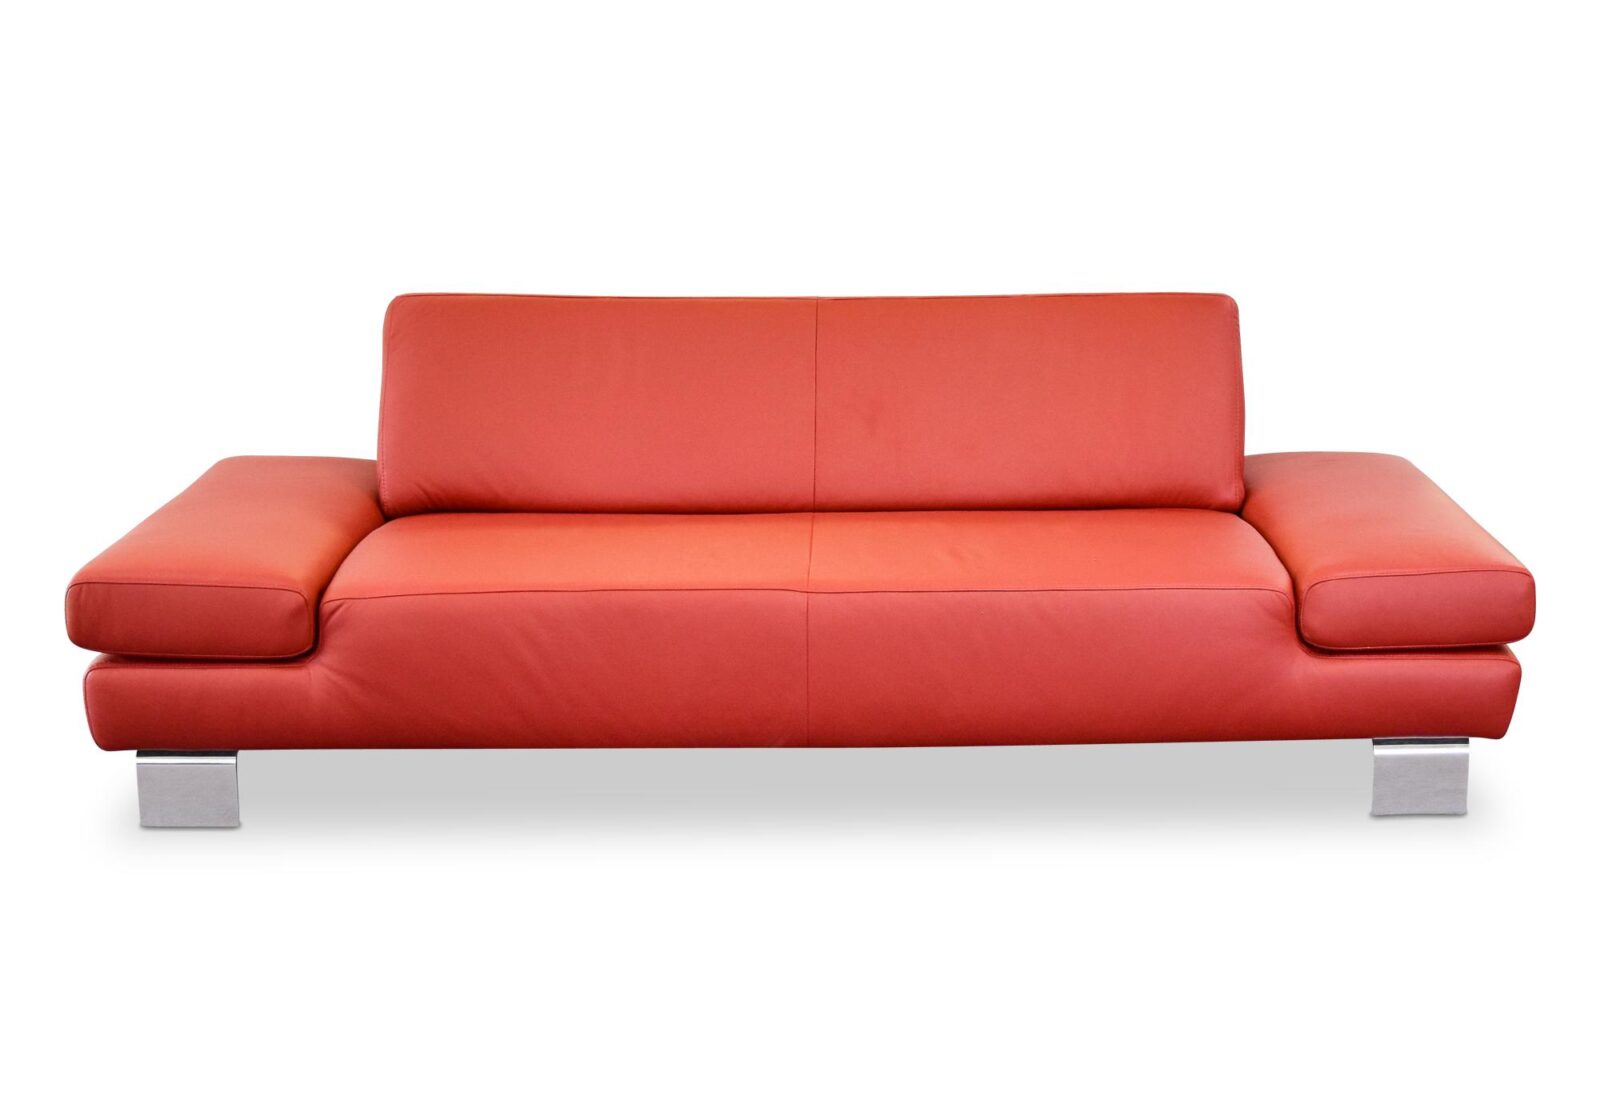 3er Sofa Bonnie  Leder oder Stoff. Bezug: Leder. Farbe: Rot. Erhältlich bei Möbel Gallati.